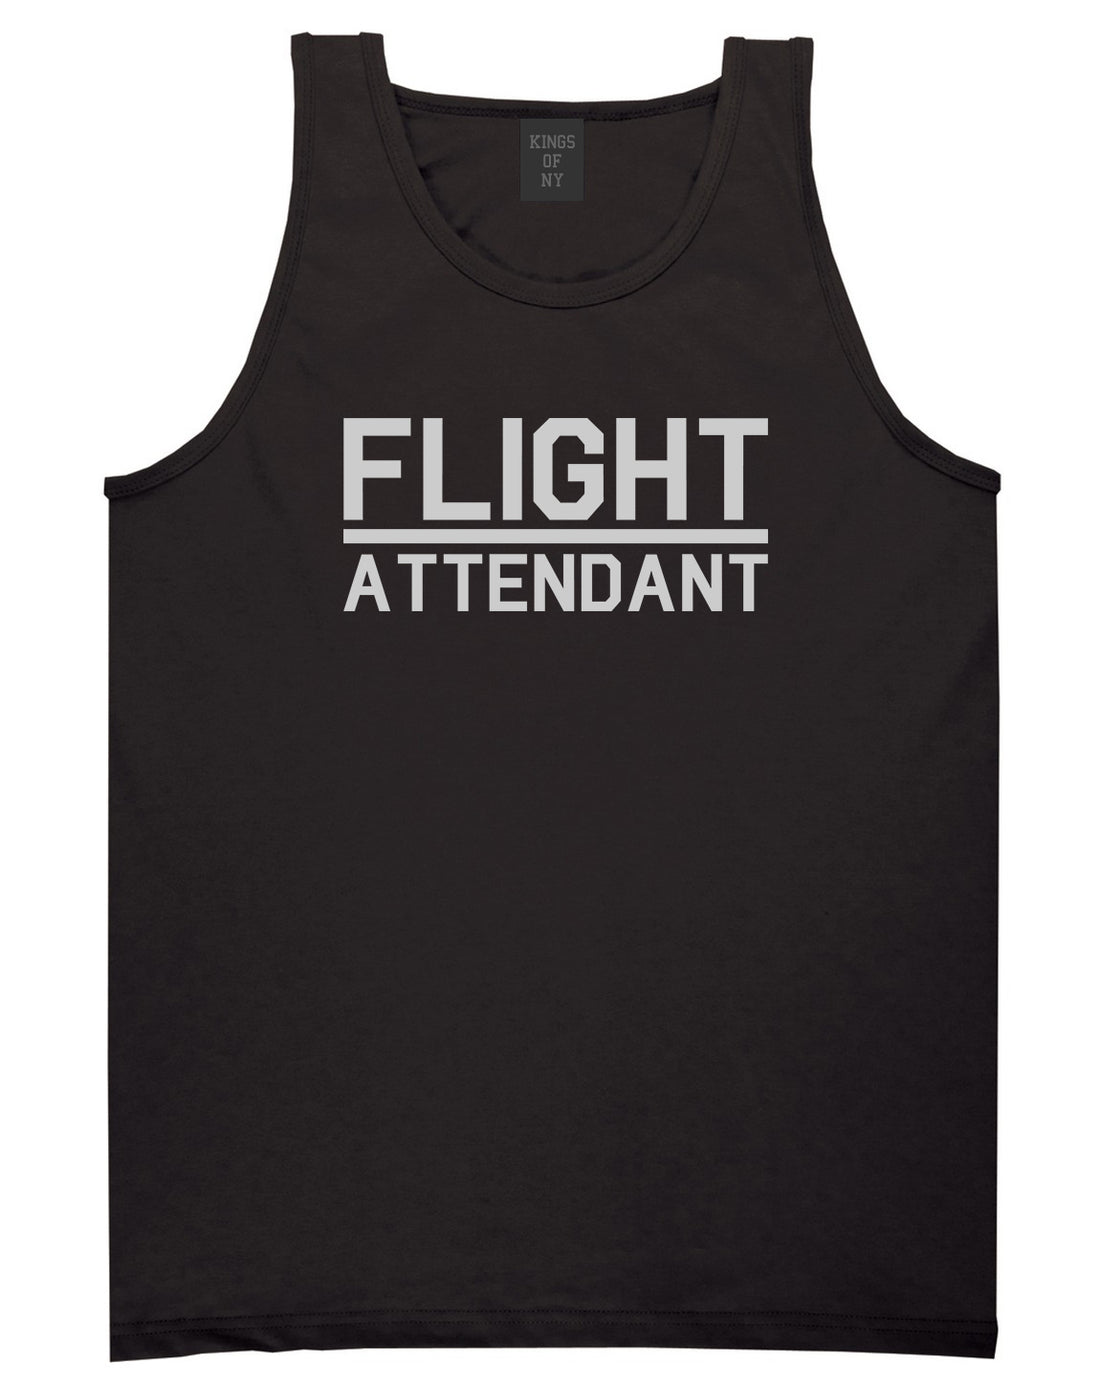 Flight Attendant Stewardess Mens Black Tank Top Shirt by KINGS OF NY